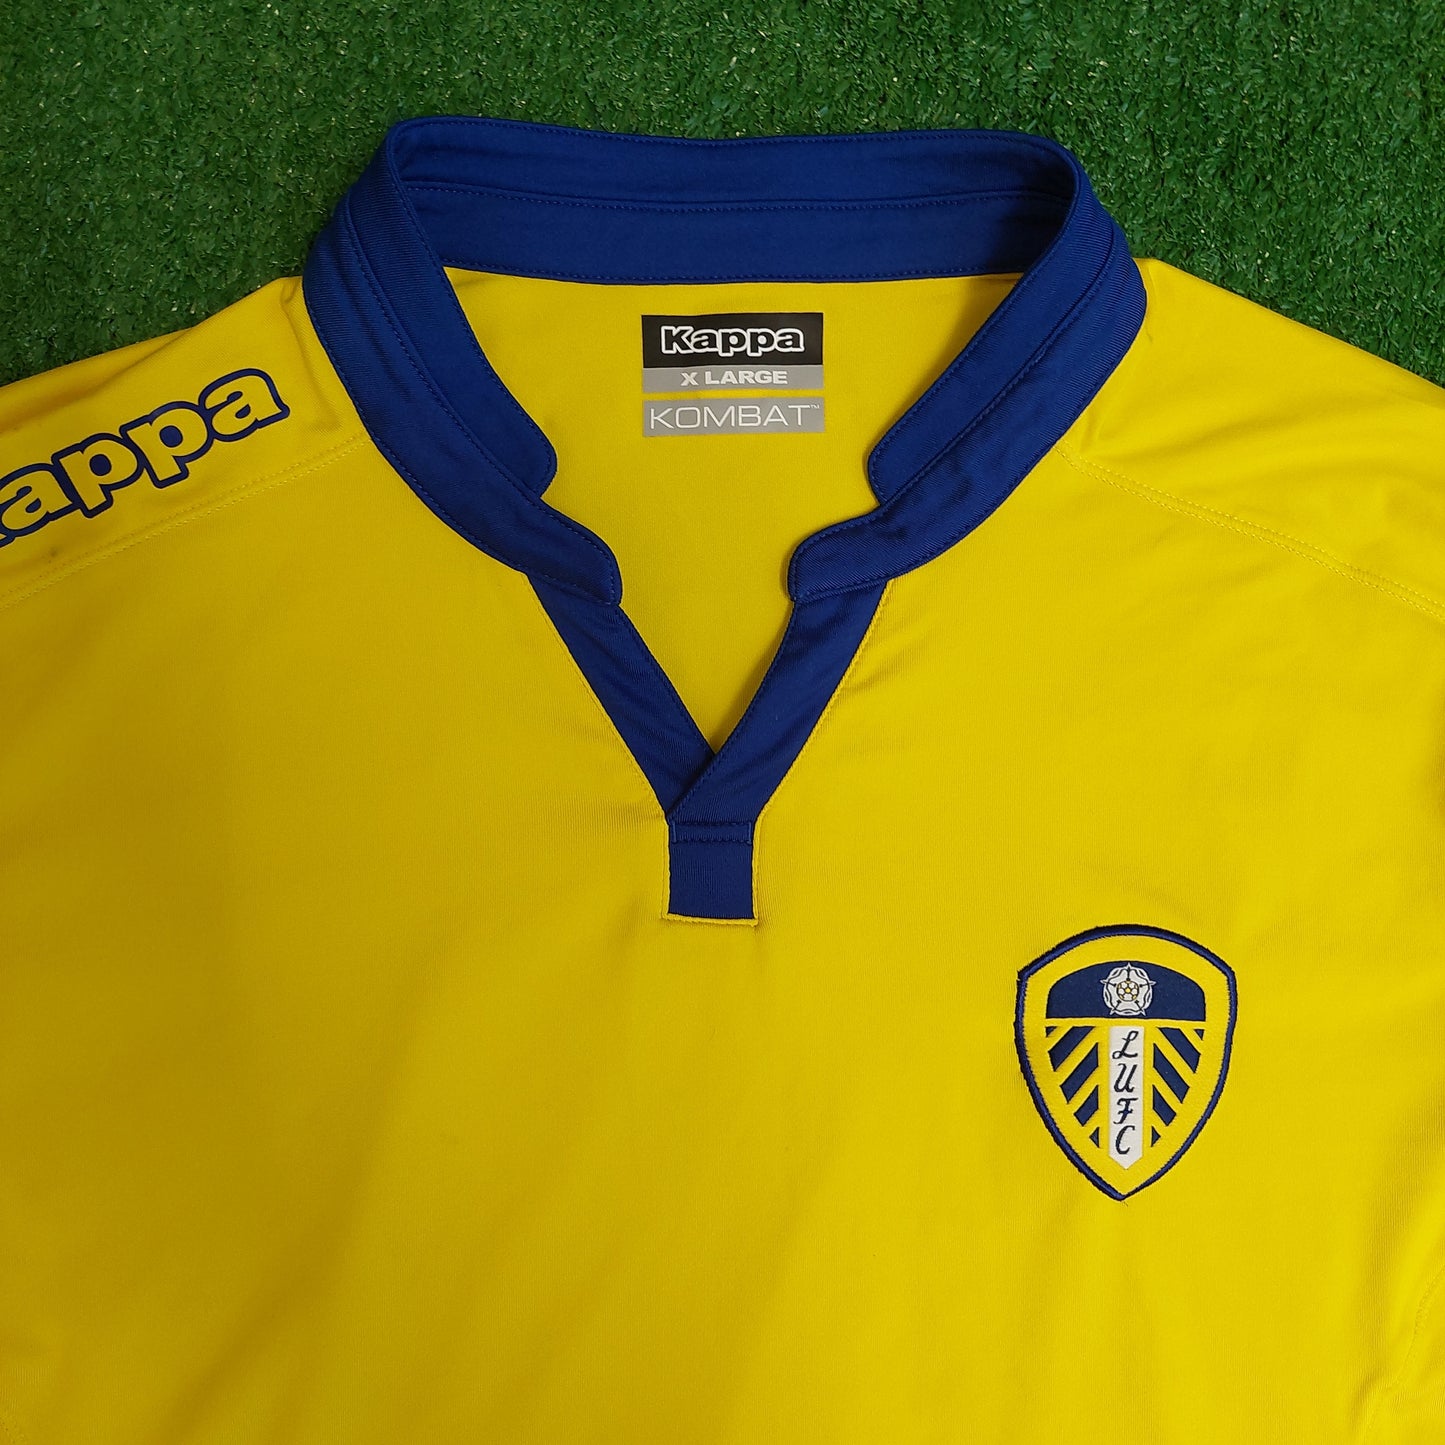 Leeds United 2015/16 Away Shirt (Very Good) - Size XL